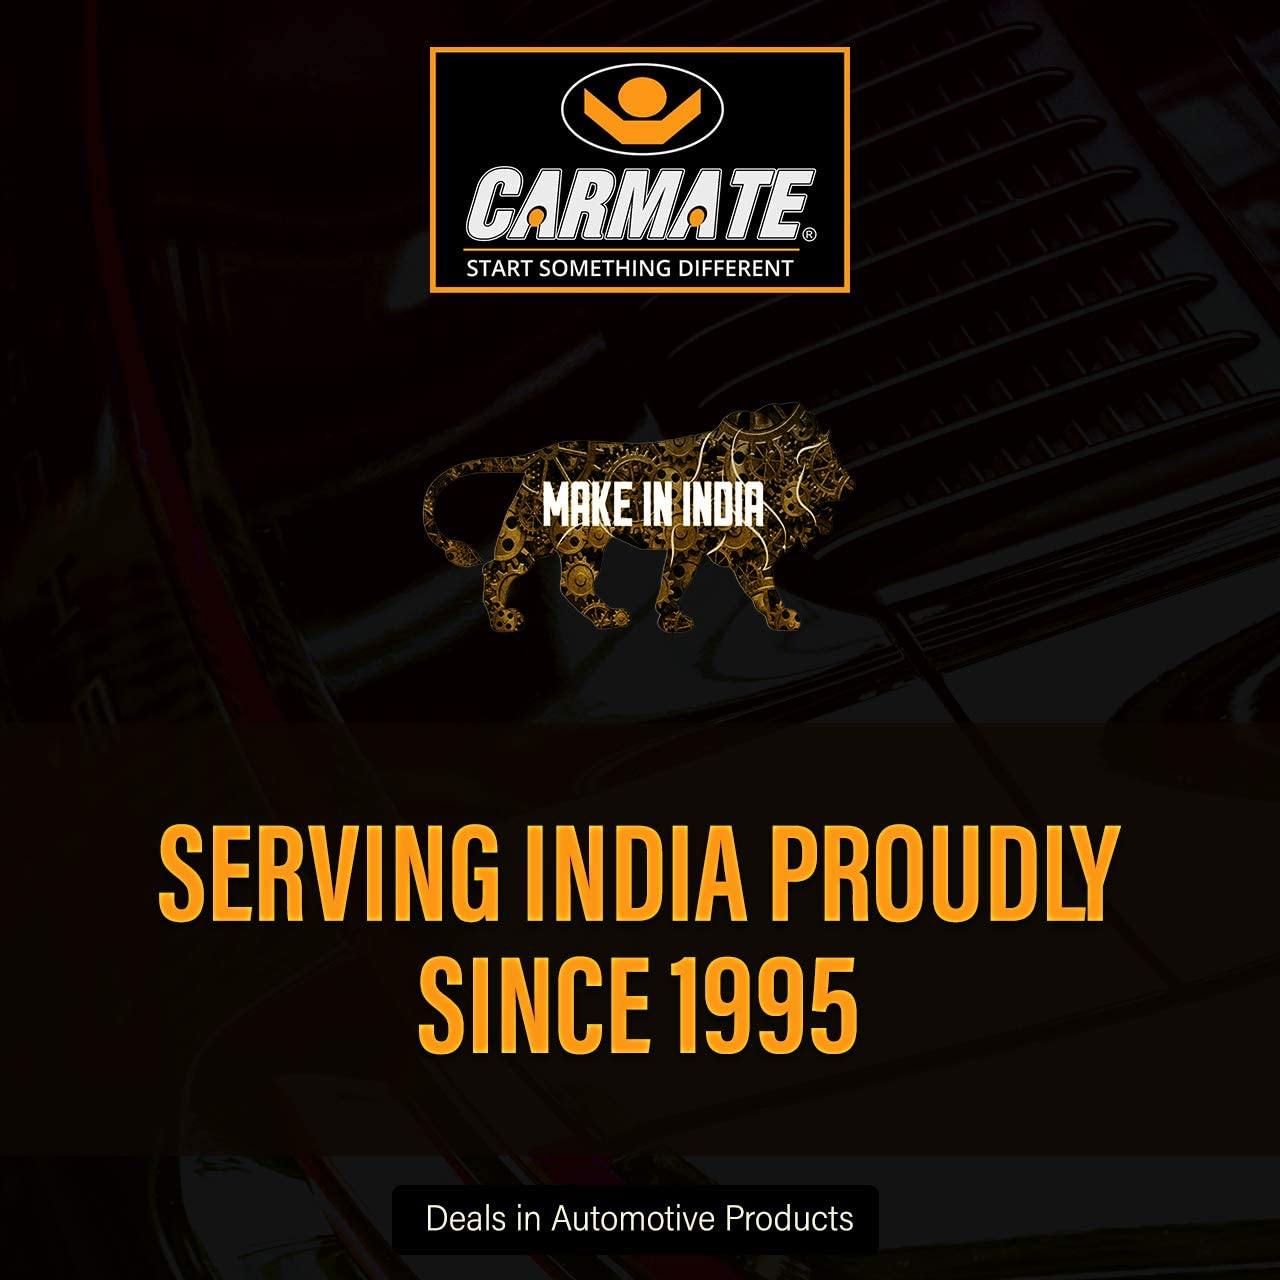 Carmate ECO Car Body Cover (Grey) for Nissan - Sunny - CARMATE®